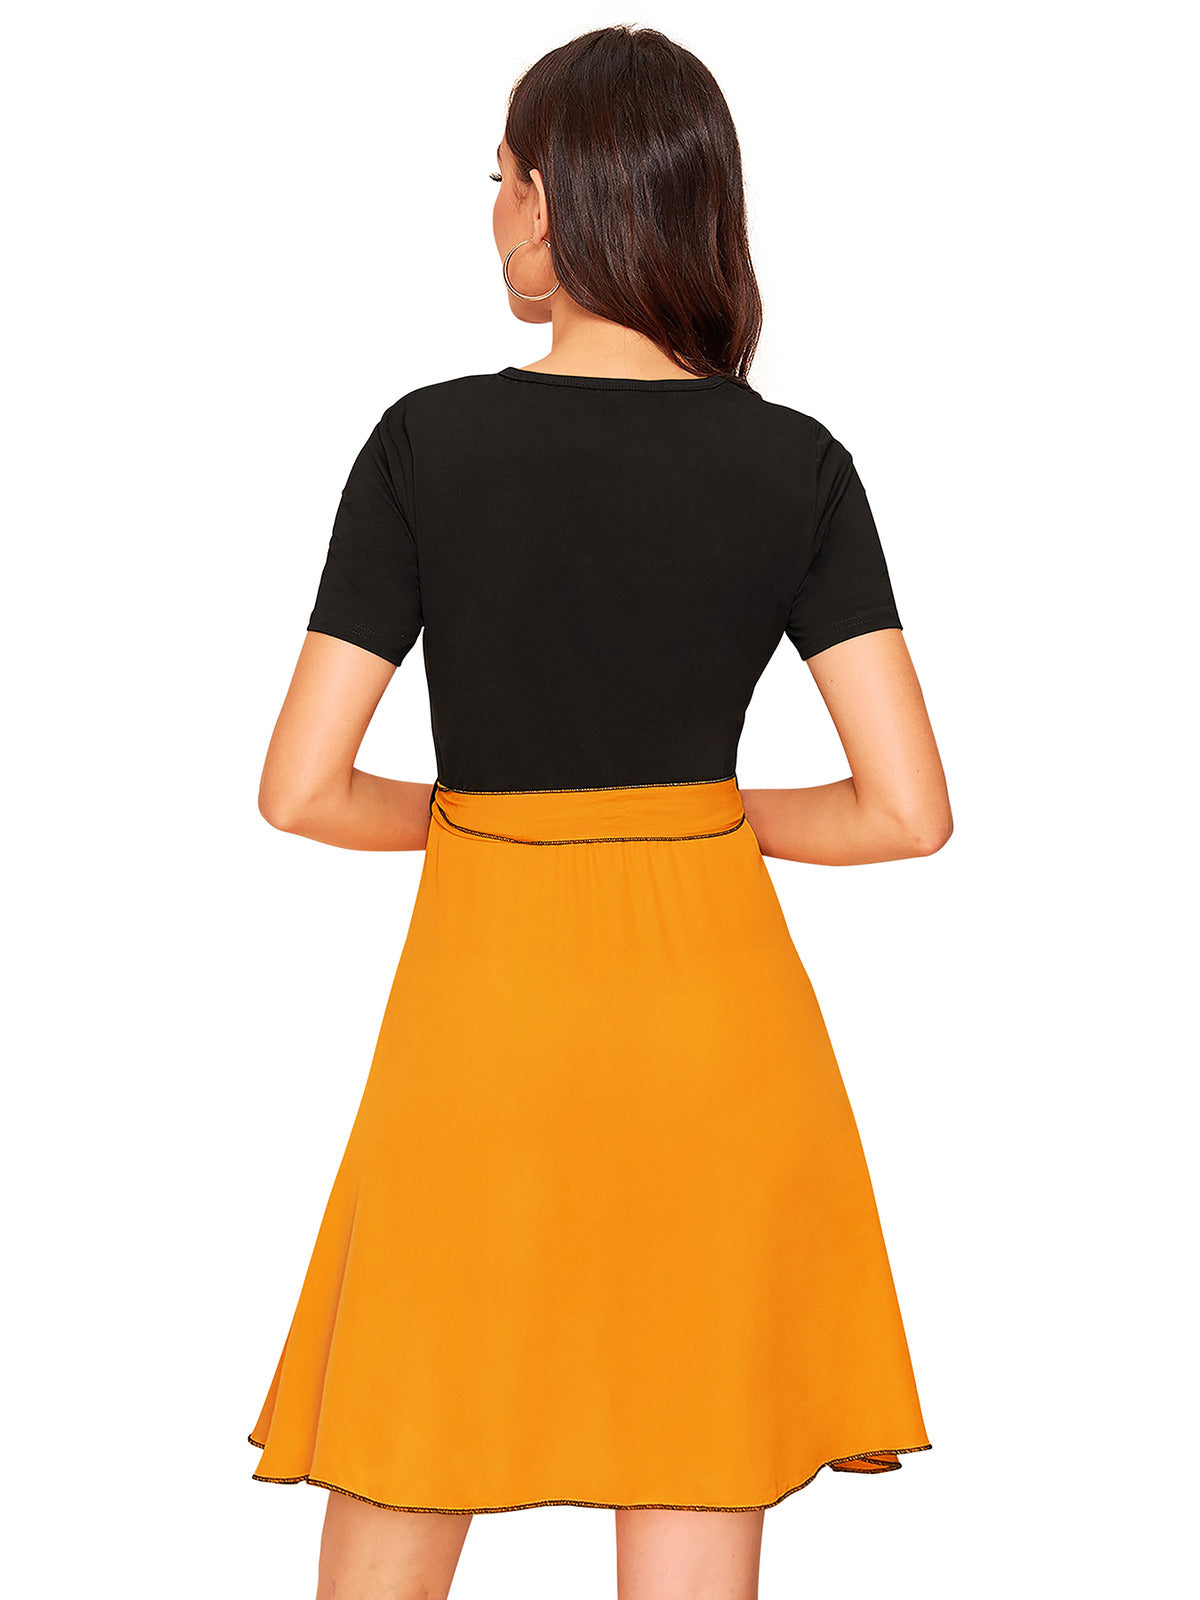 Odette Yellow Knit Fabric Dress For Women